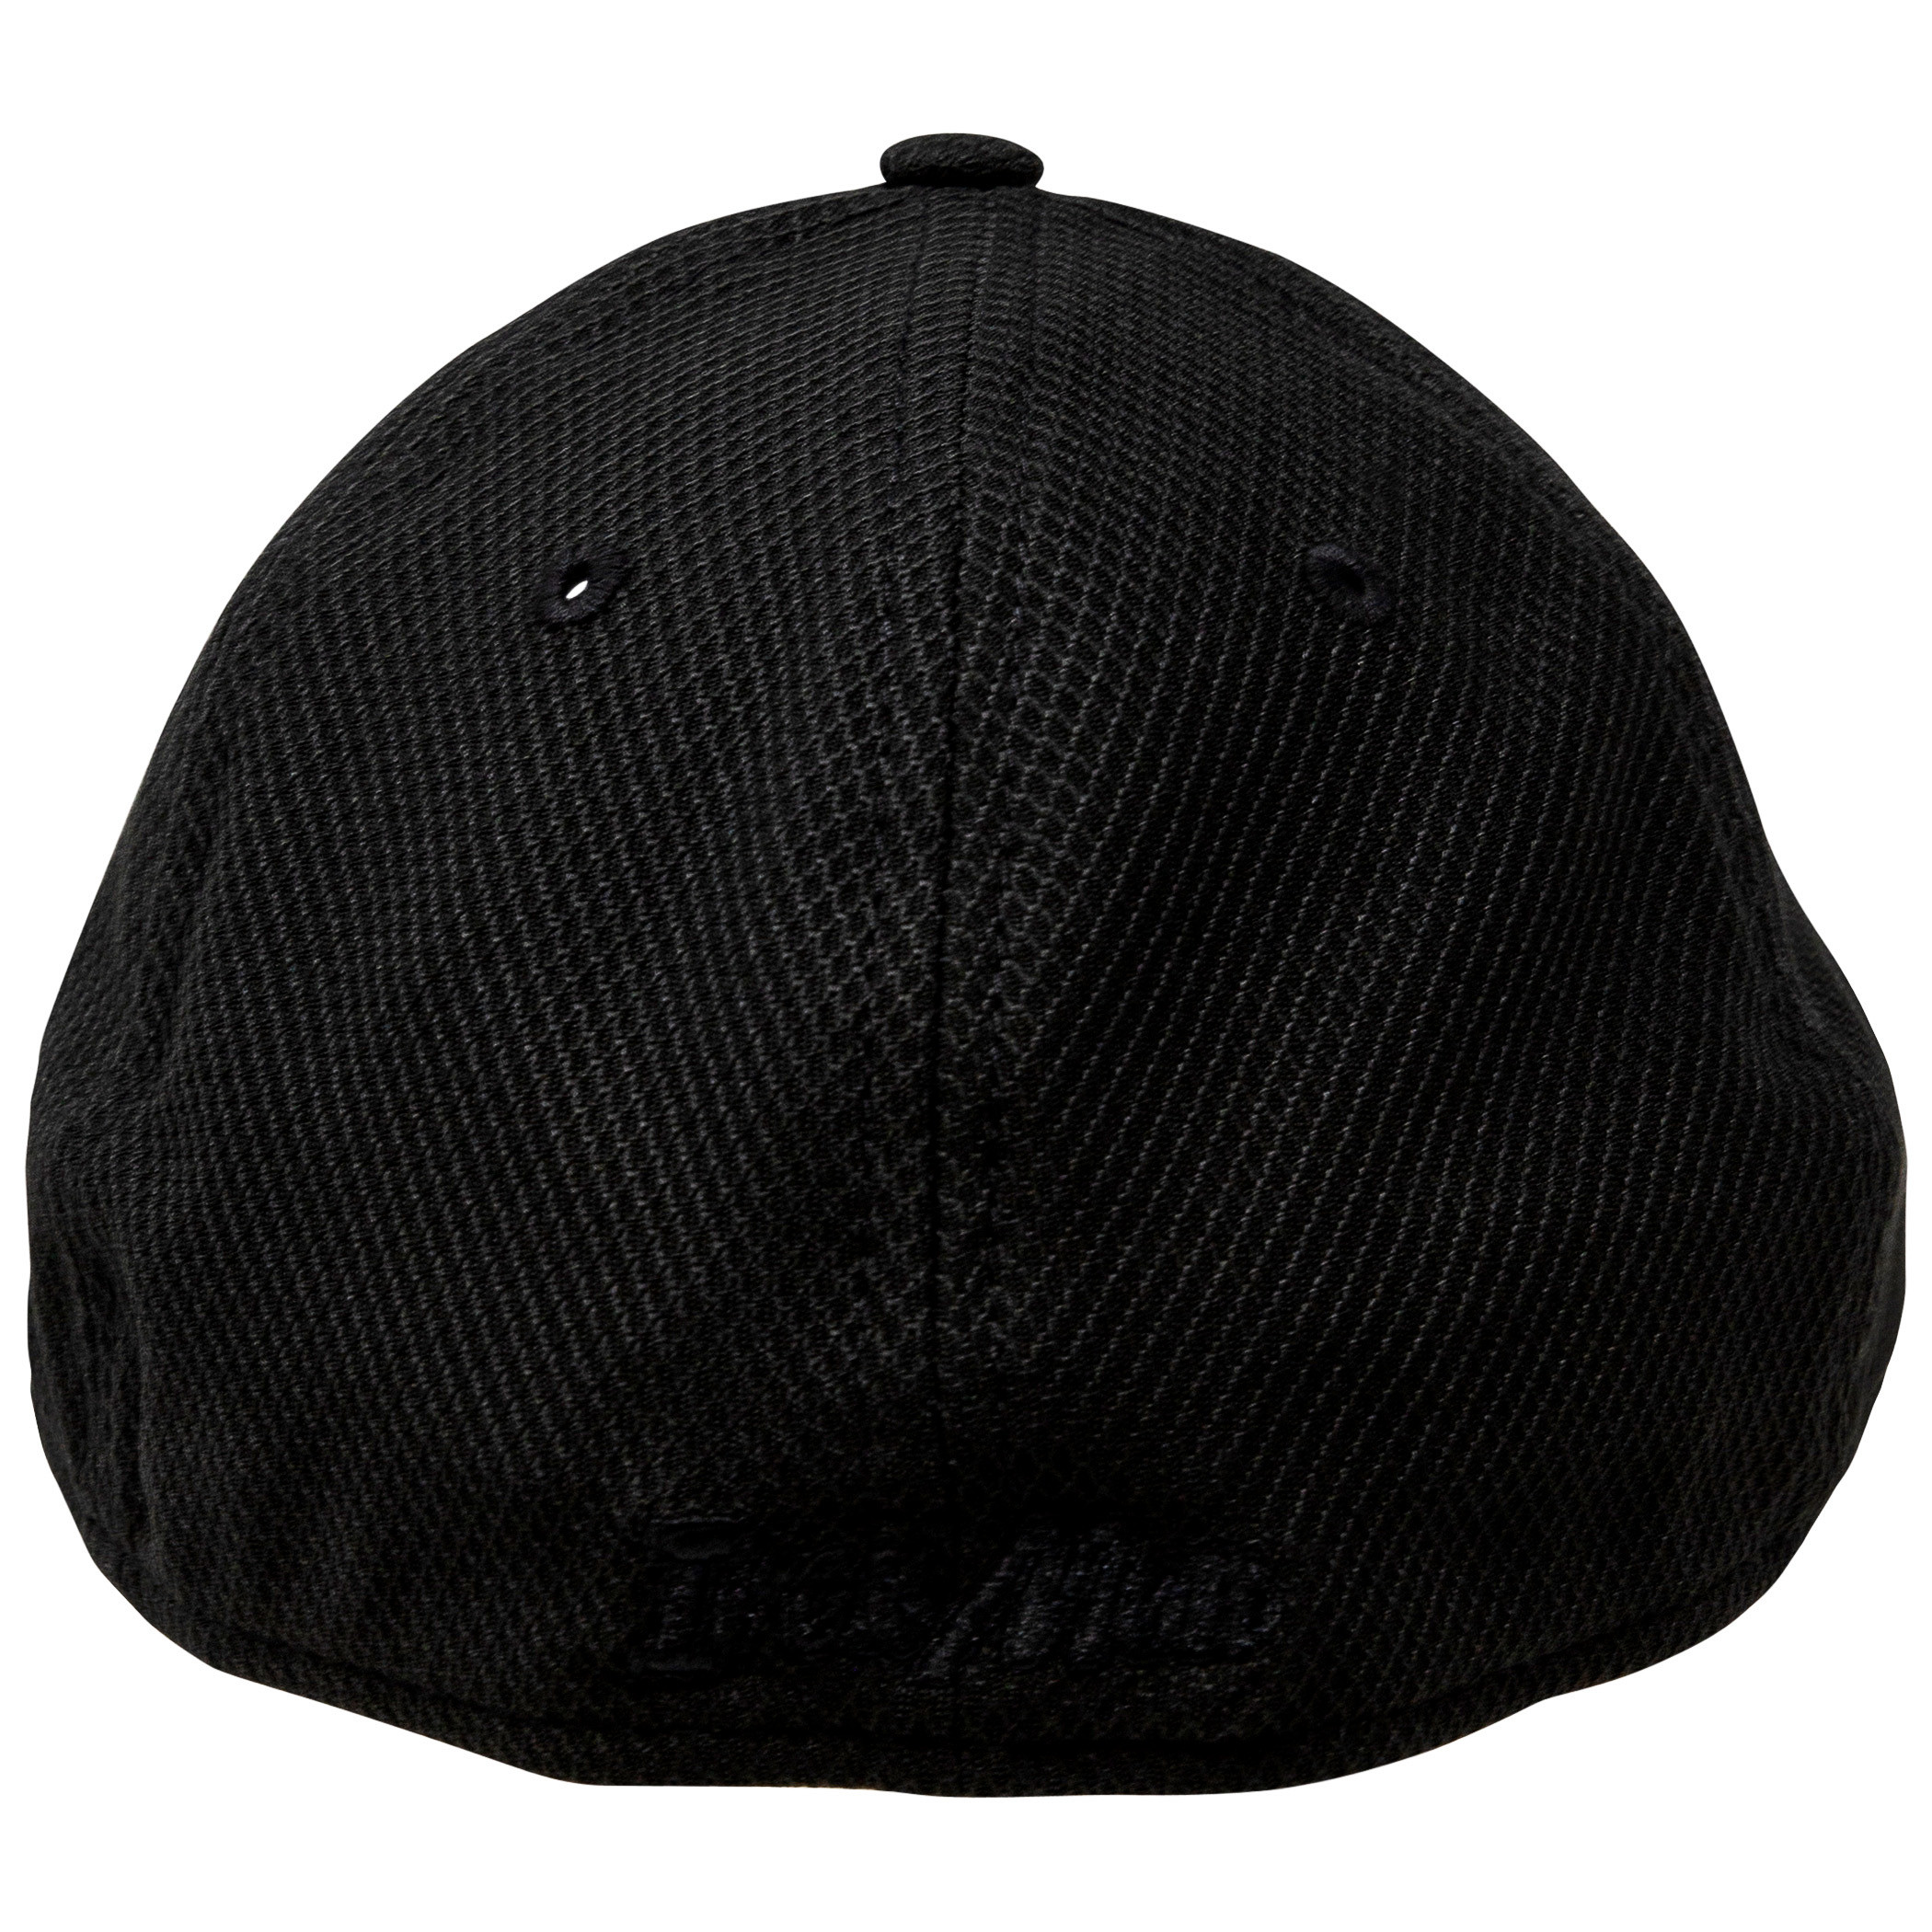 Iron Man Black on Black New Era 39Thirty Flex Fitted Hat